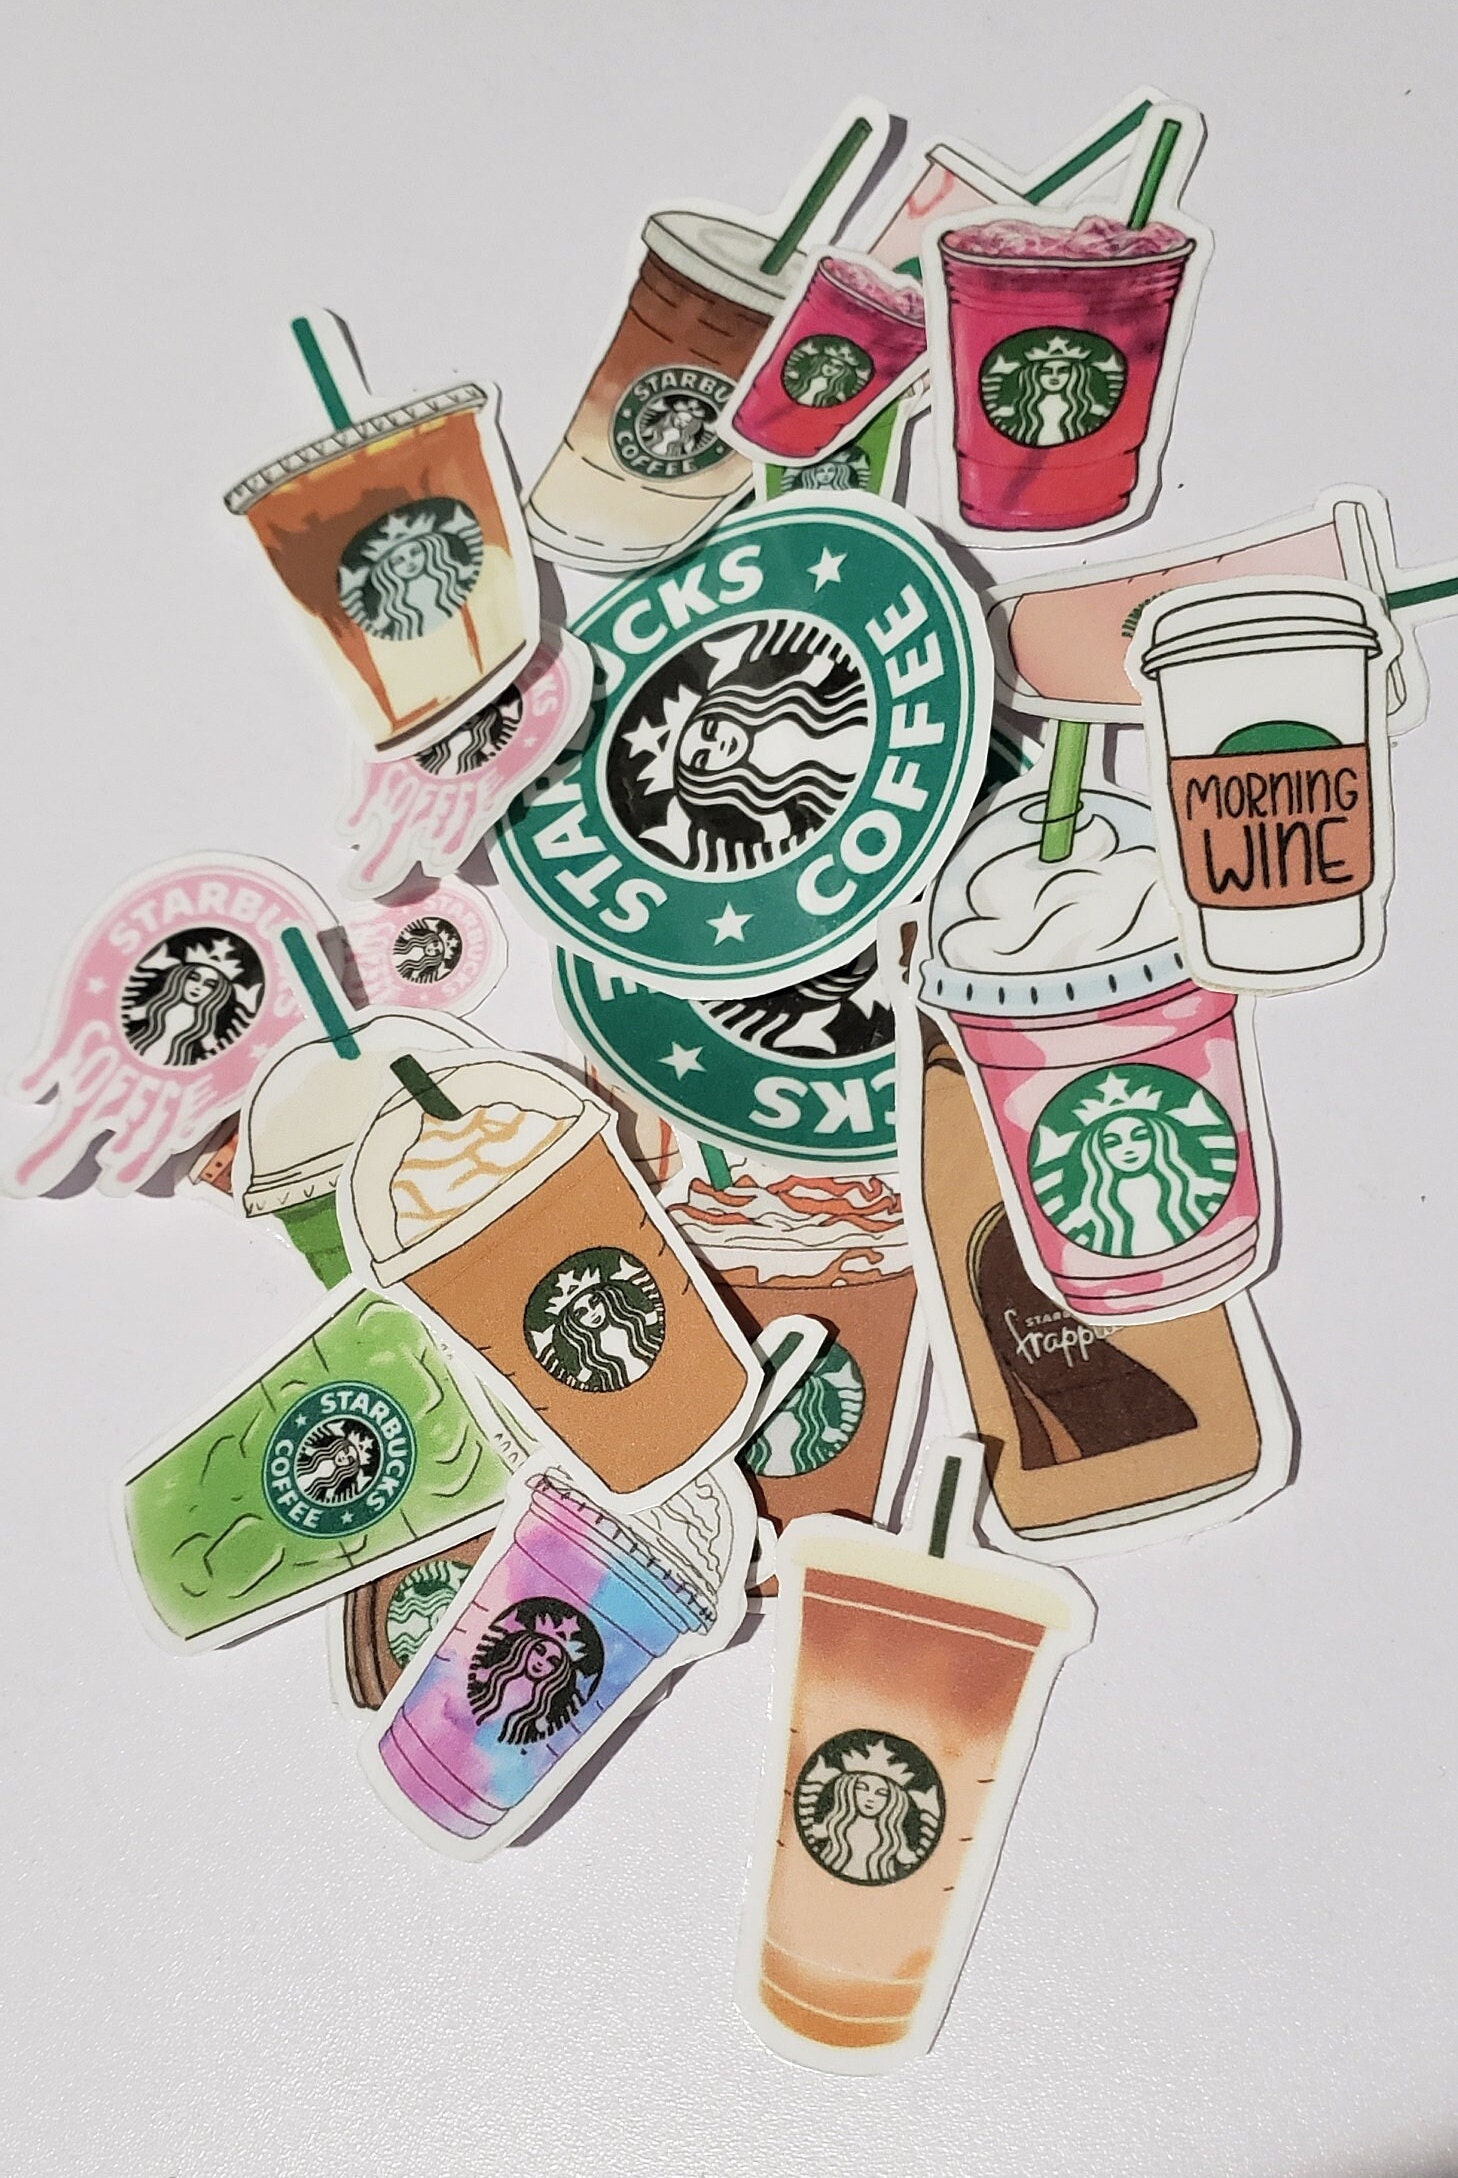 Other, Starbucks Drink Stickers 15 Pcs